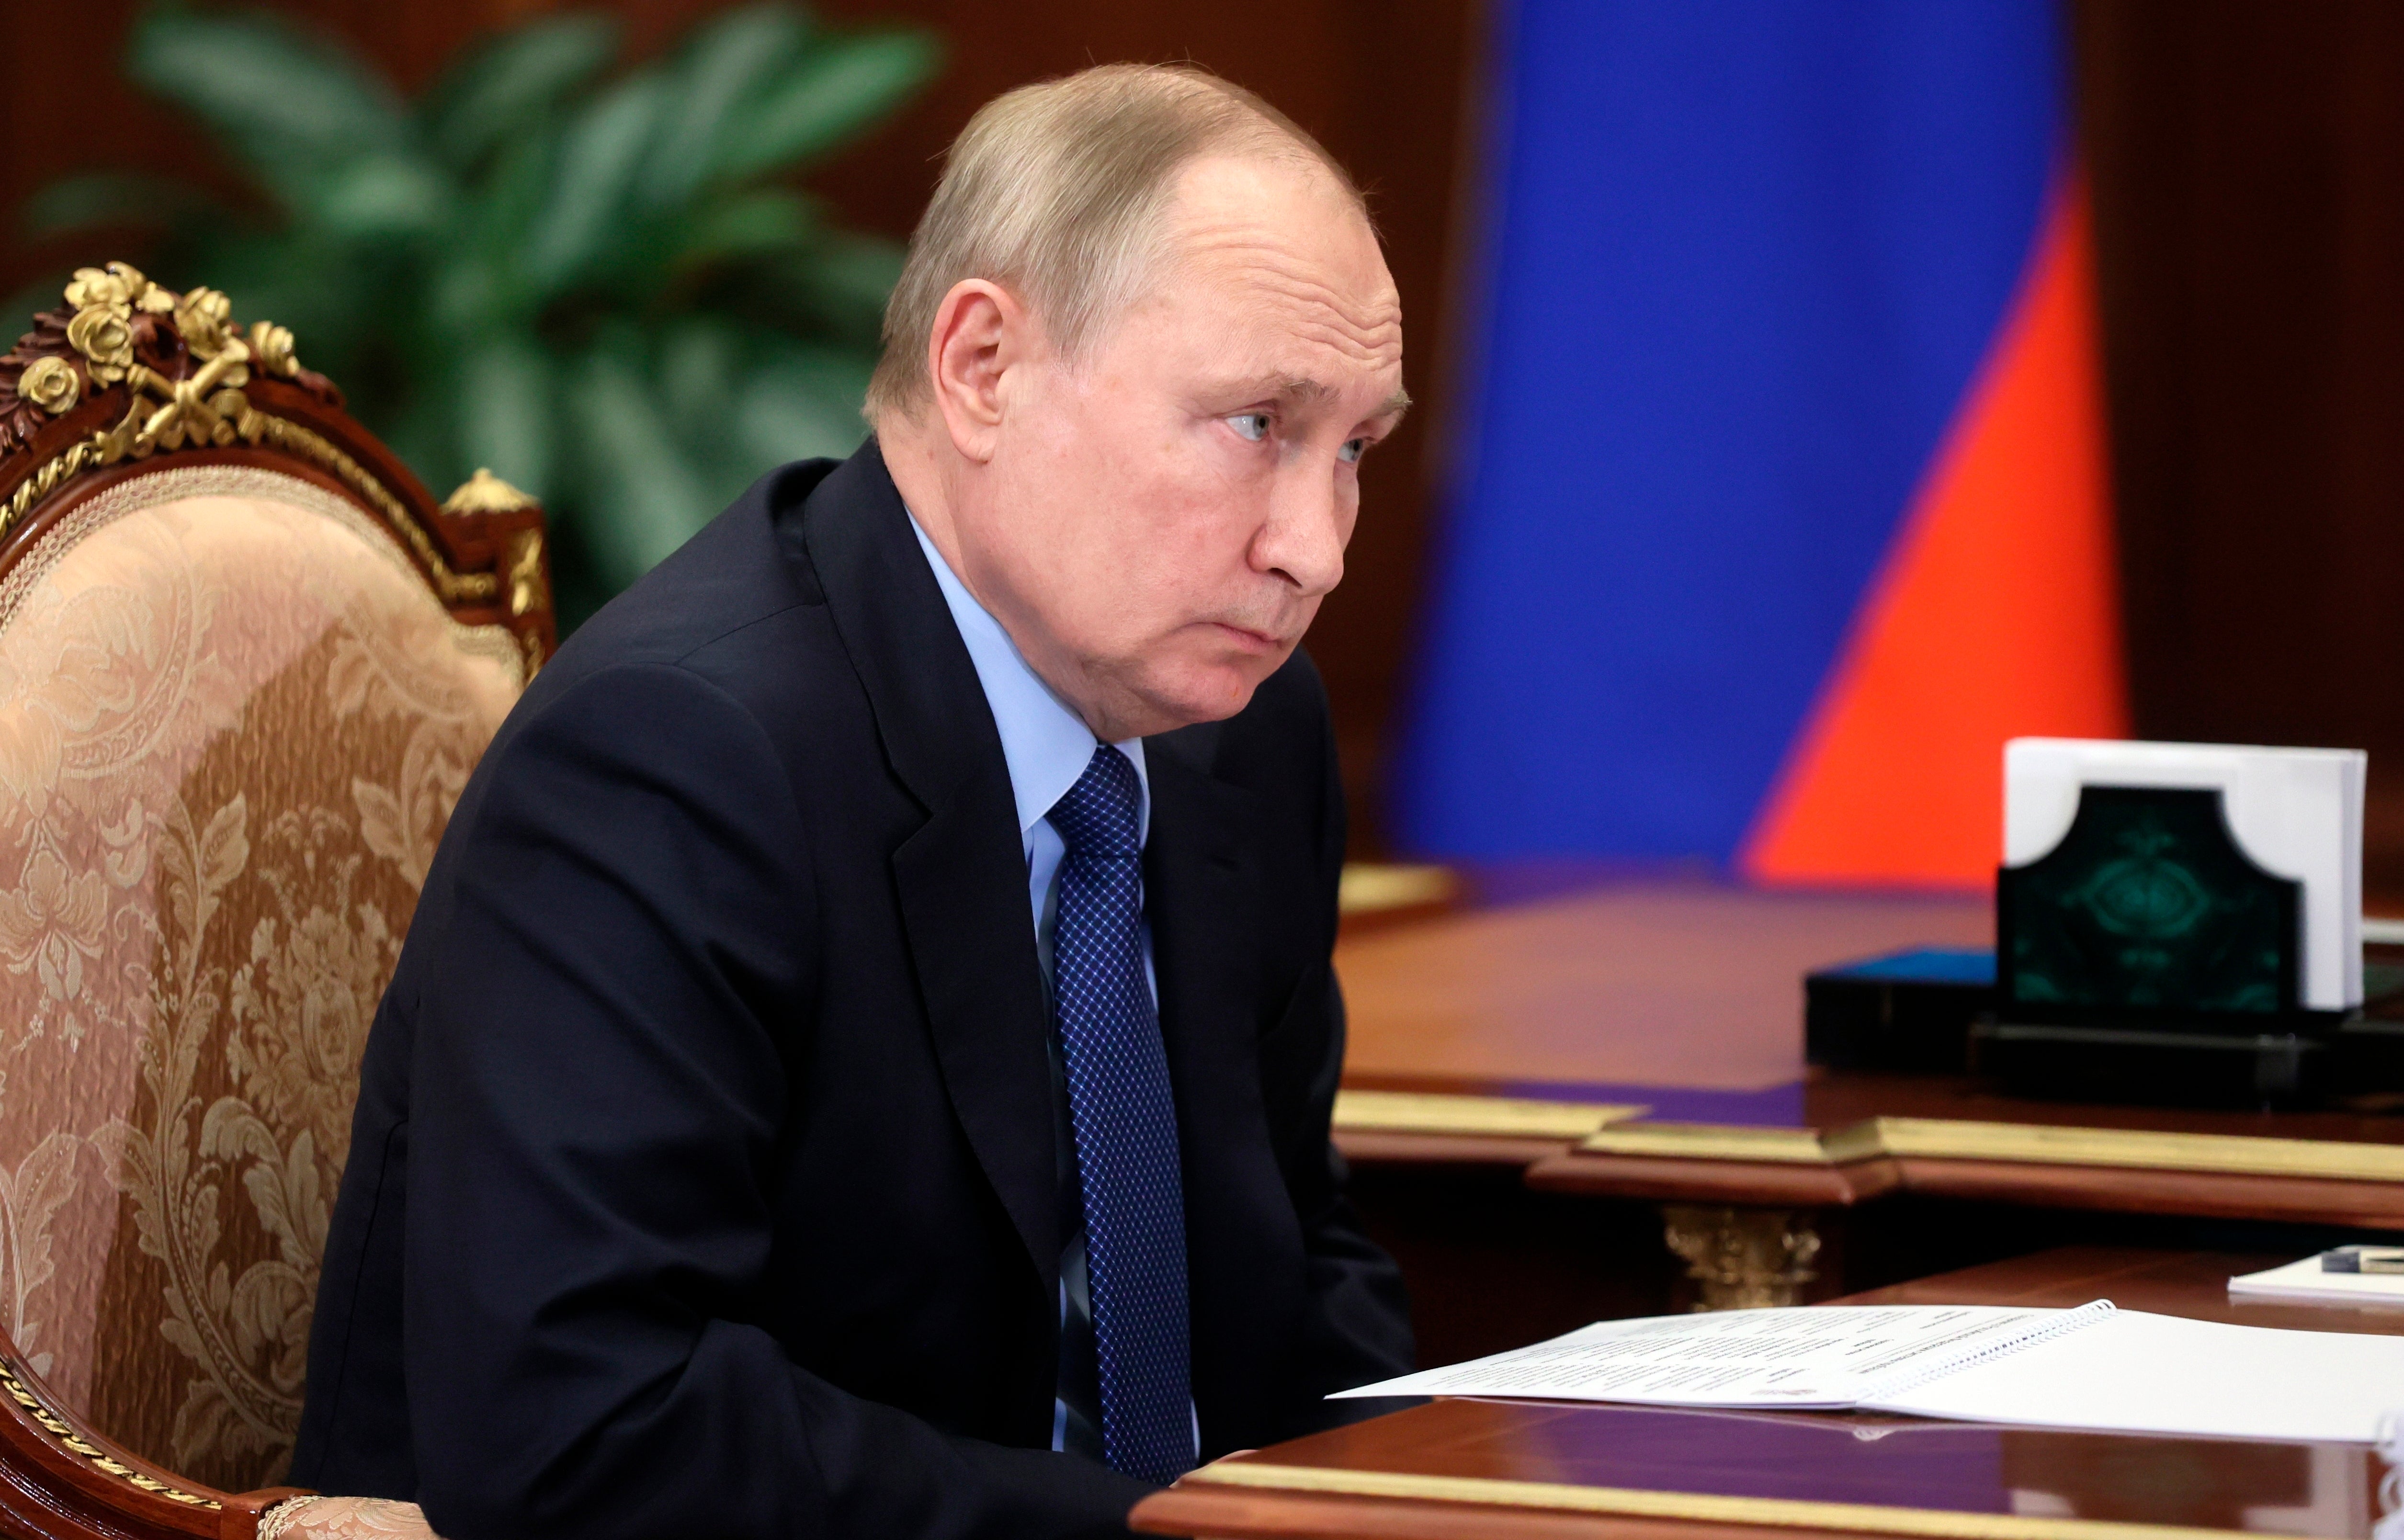 Vladimir Putin (Mikhail Metzel, Sputnik, Kremlin Pool Photo via AP)